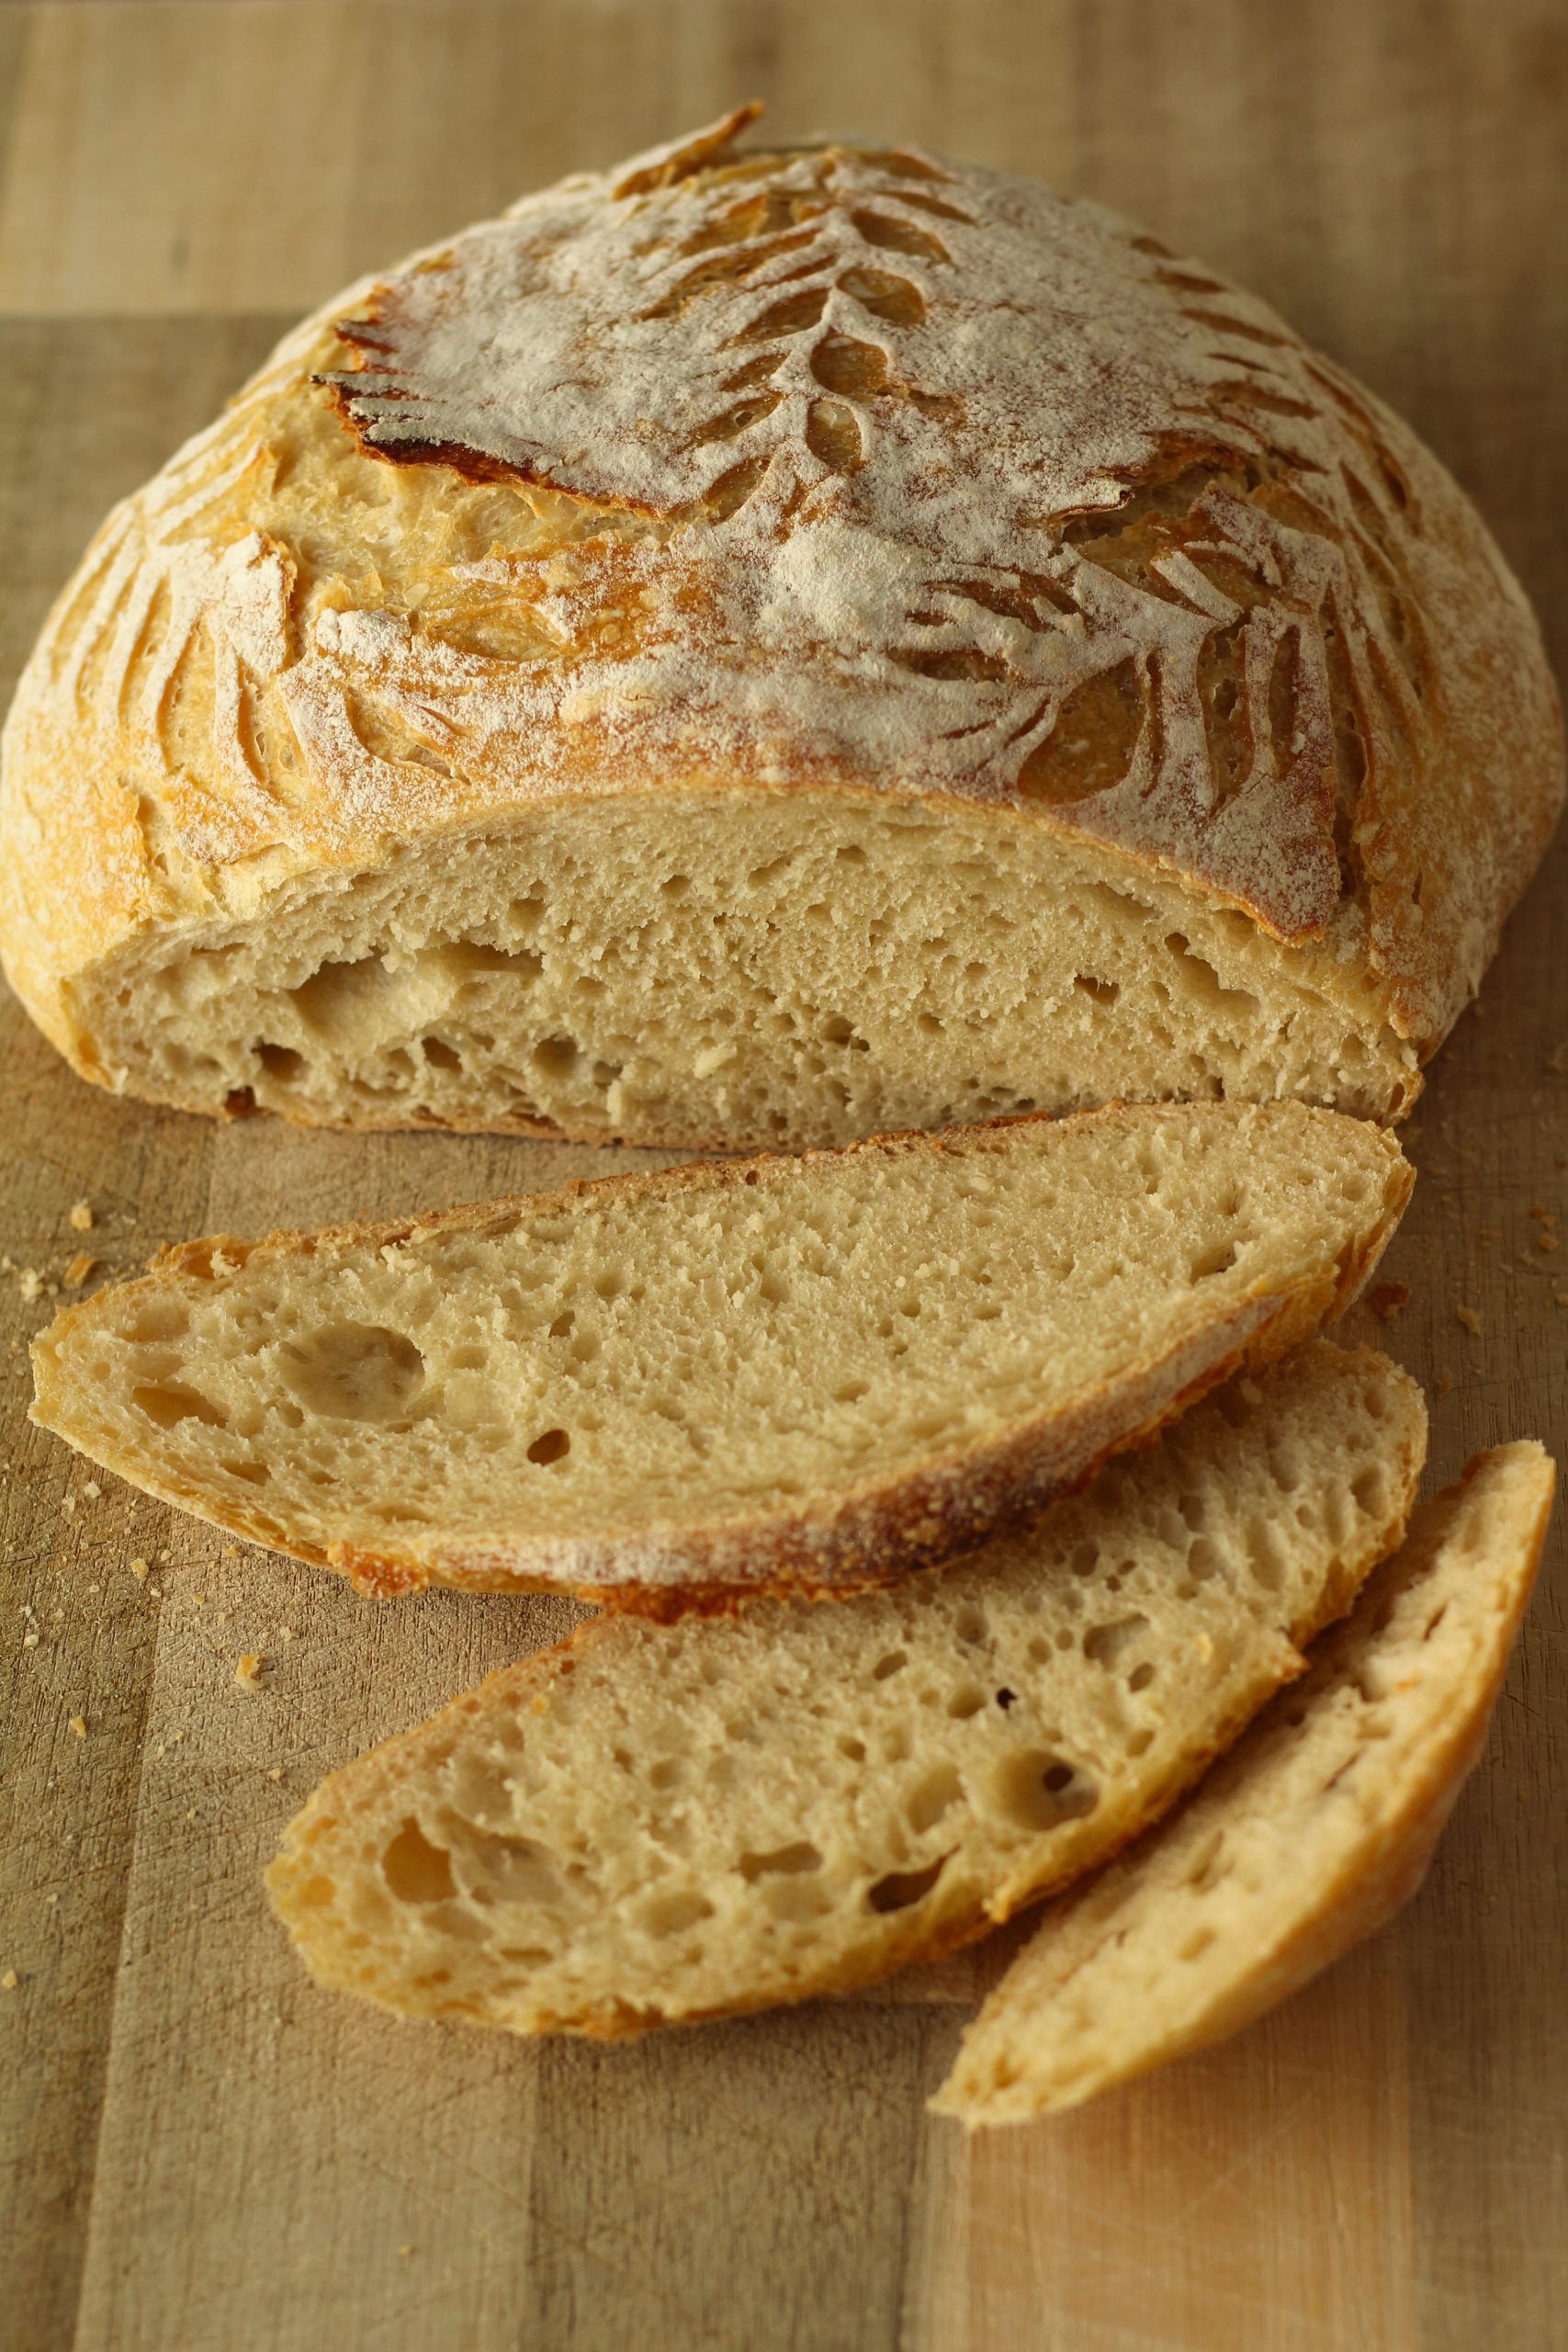 Fresh baked and cut sourdough bread